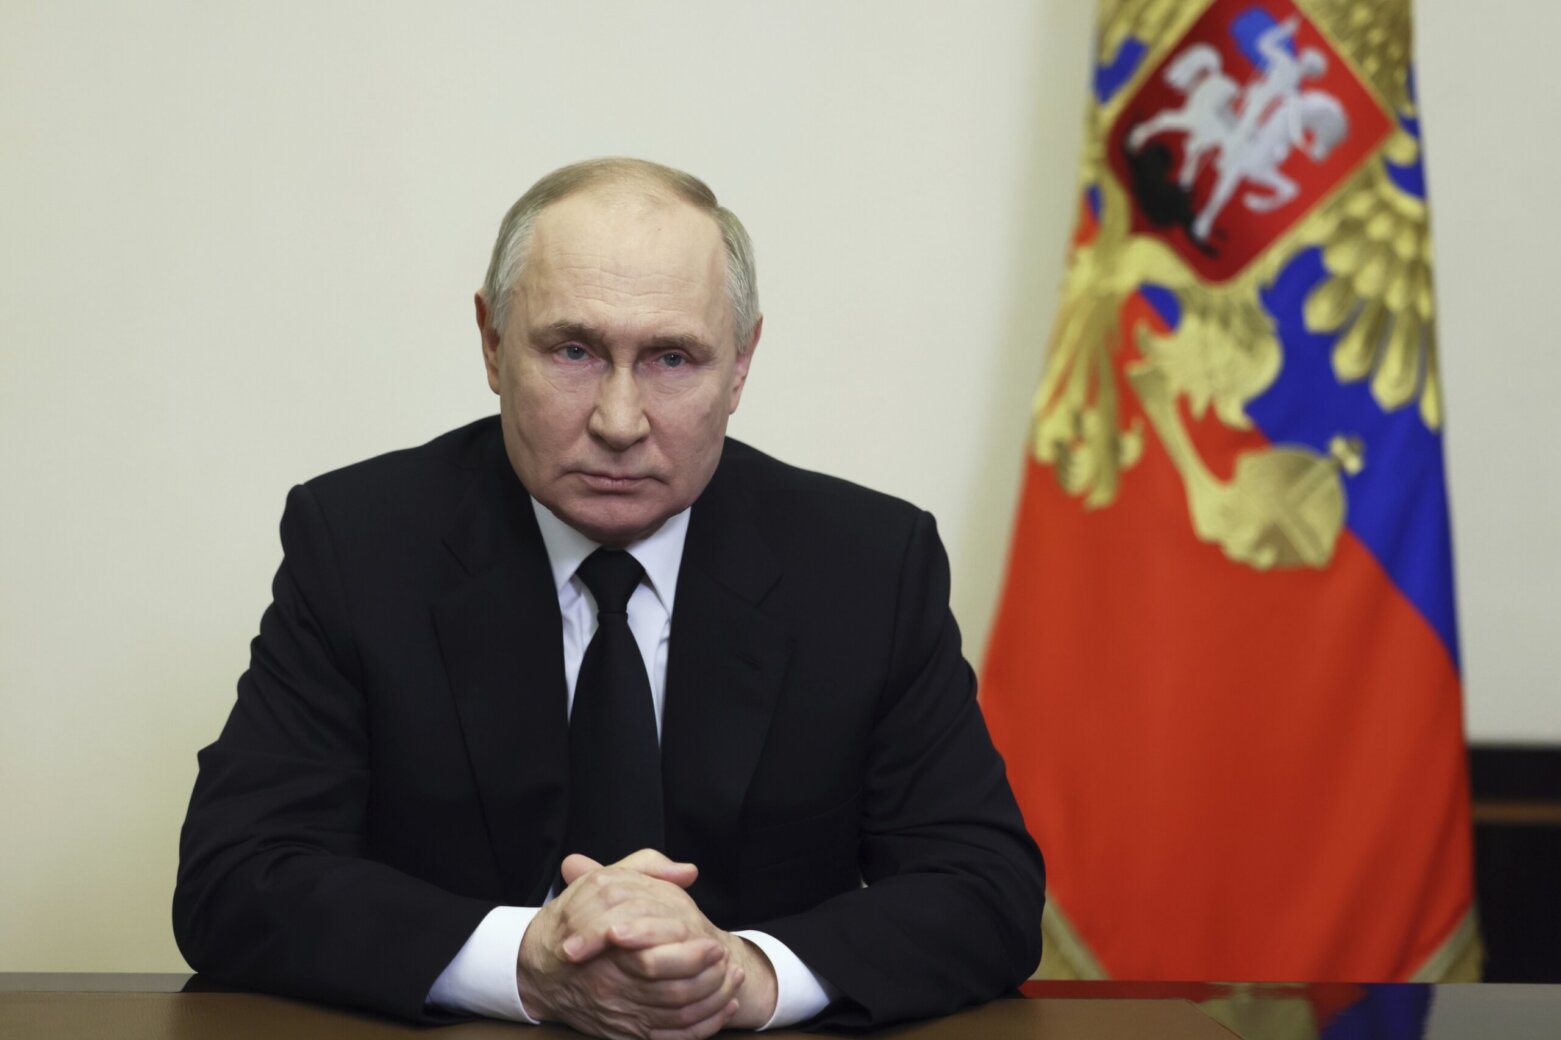 Persistent rumors of Putin's death evoke a nonchalant international reaction